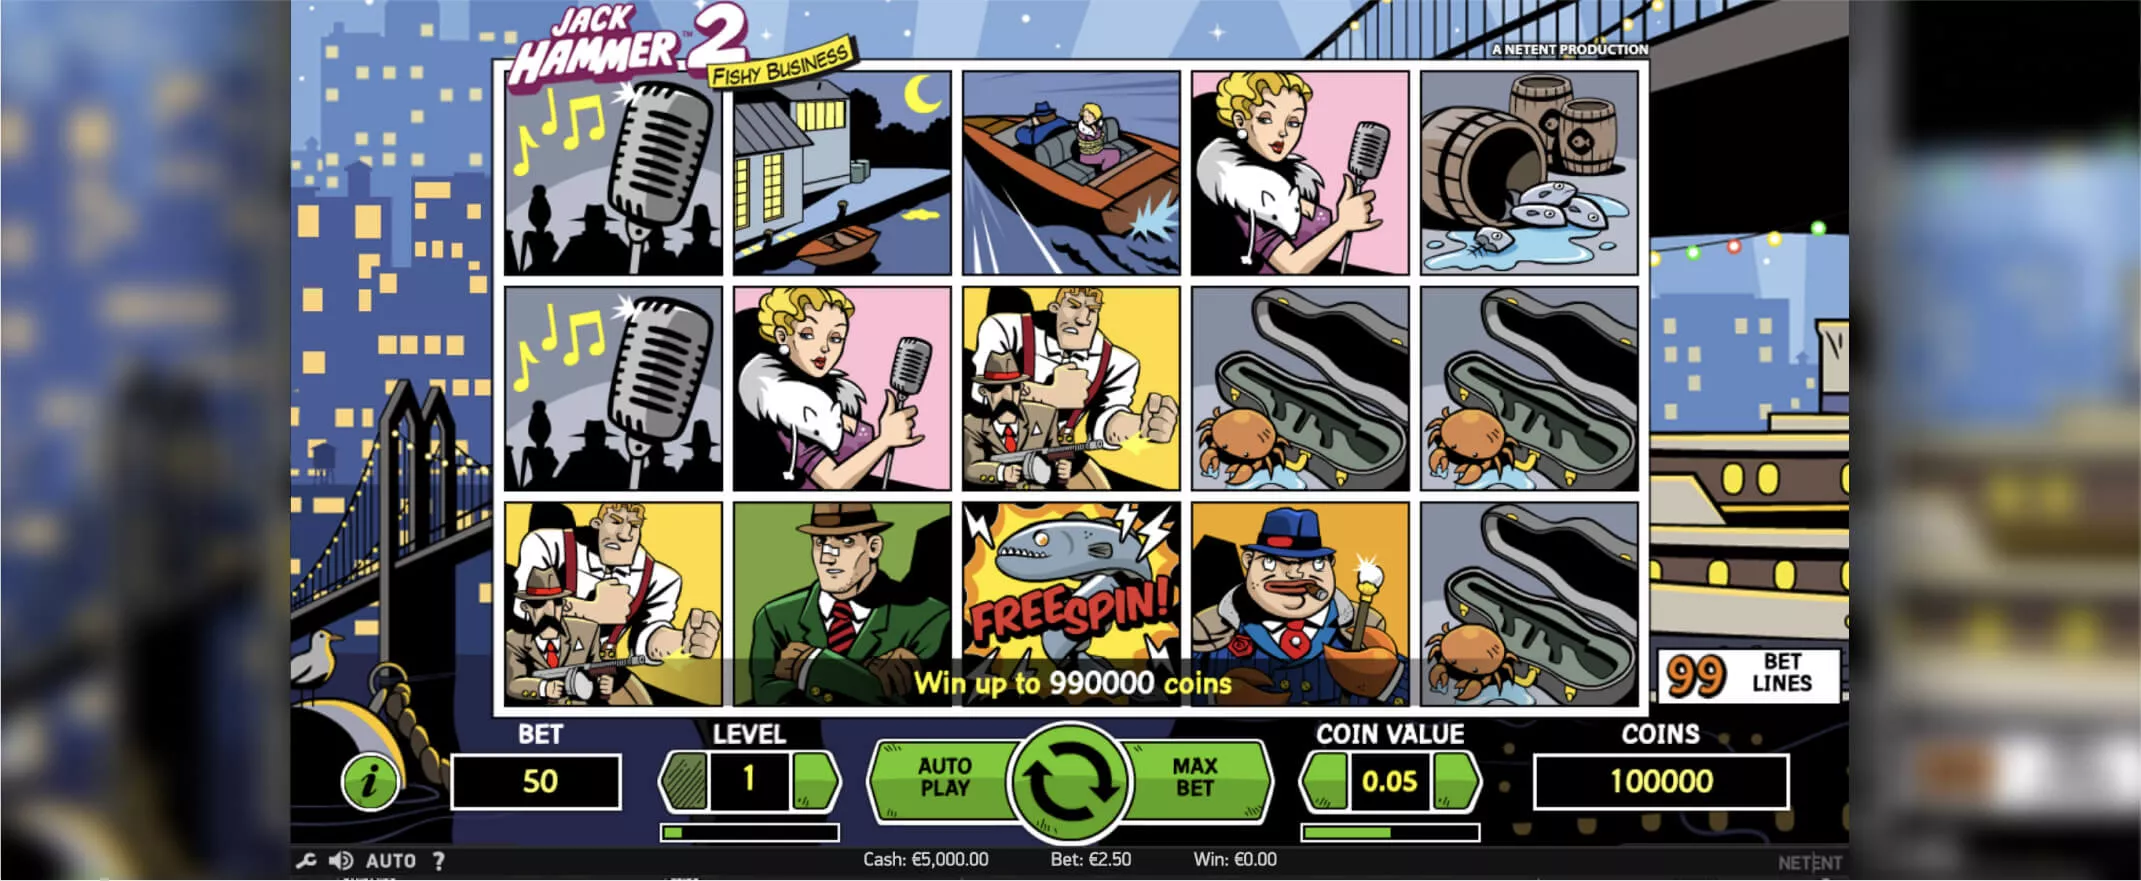 Jack Hammer 2 gameplay screenshot